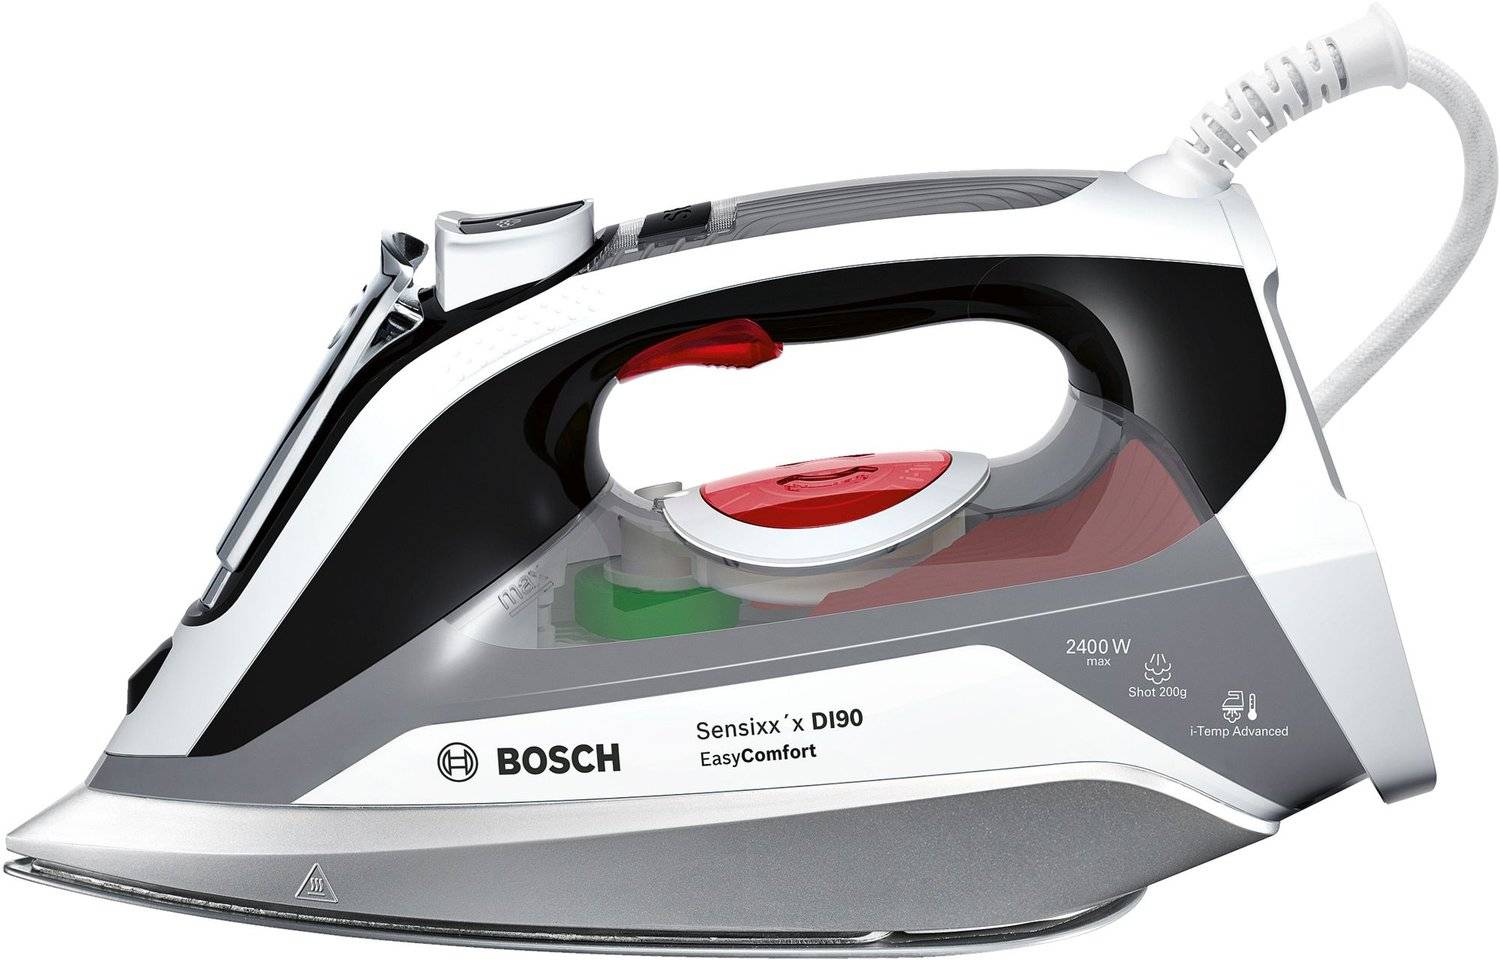 Bosch sensixx advanced steam как чистить фото 99